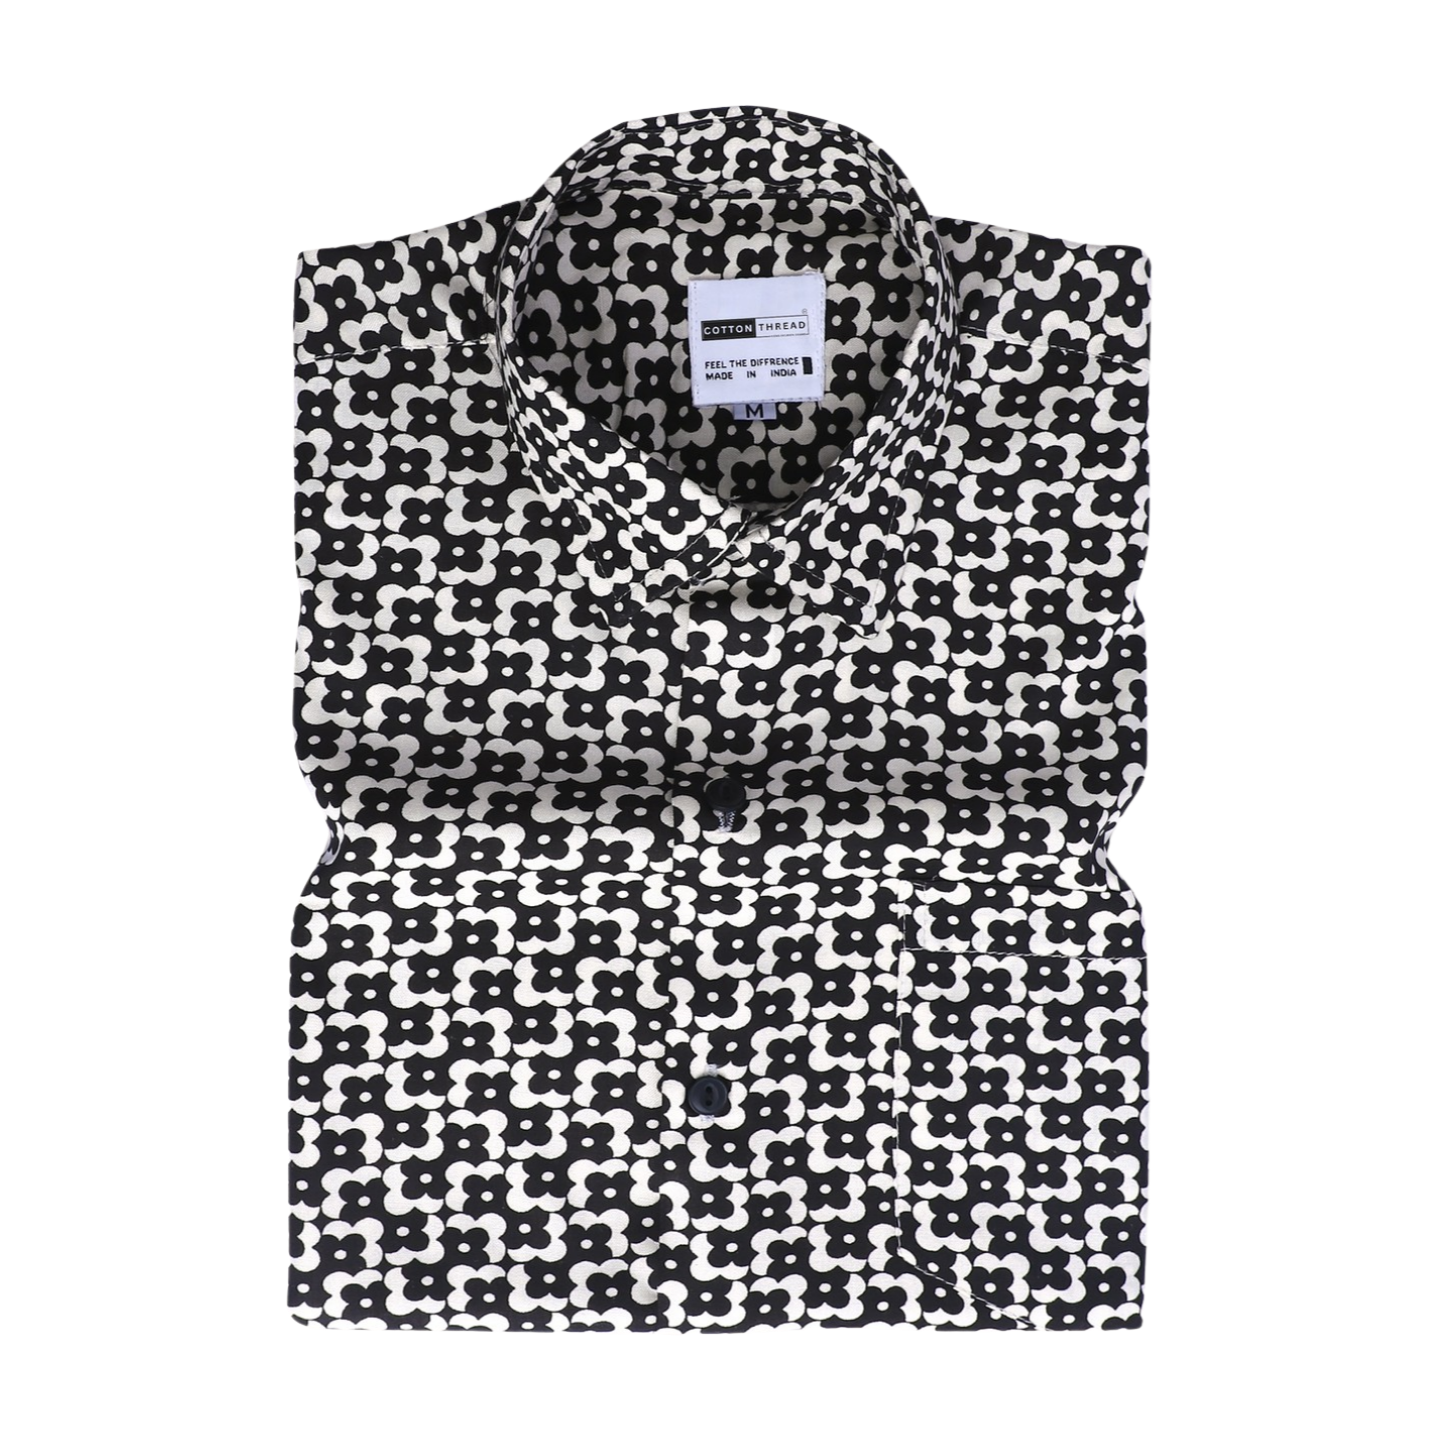 Men's Premium Cotton Full Sleeve Black Cream Geometric Printed Shirt By Cotton Thread (PRT-058)